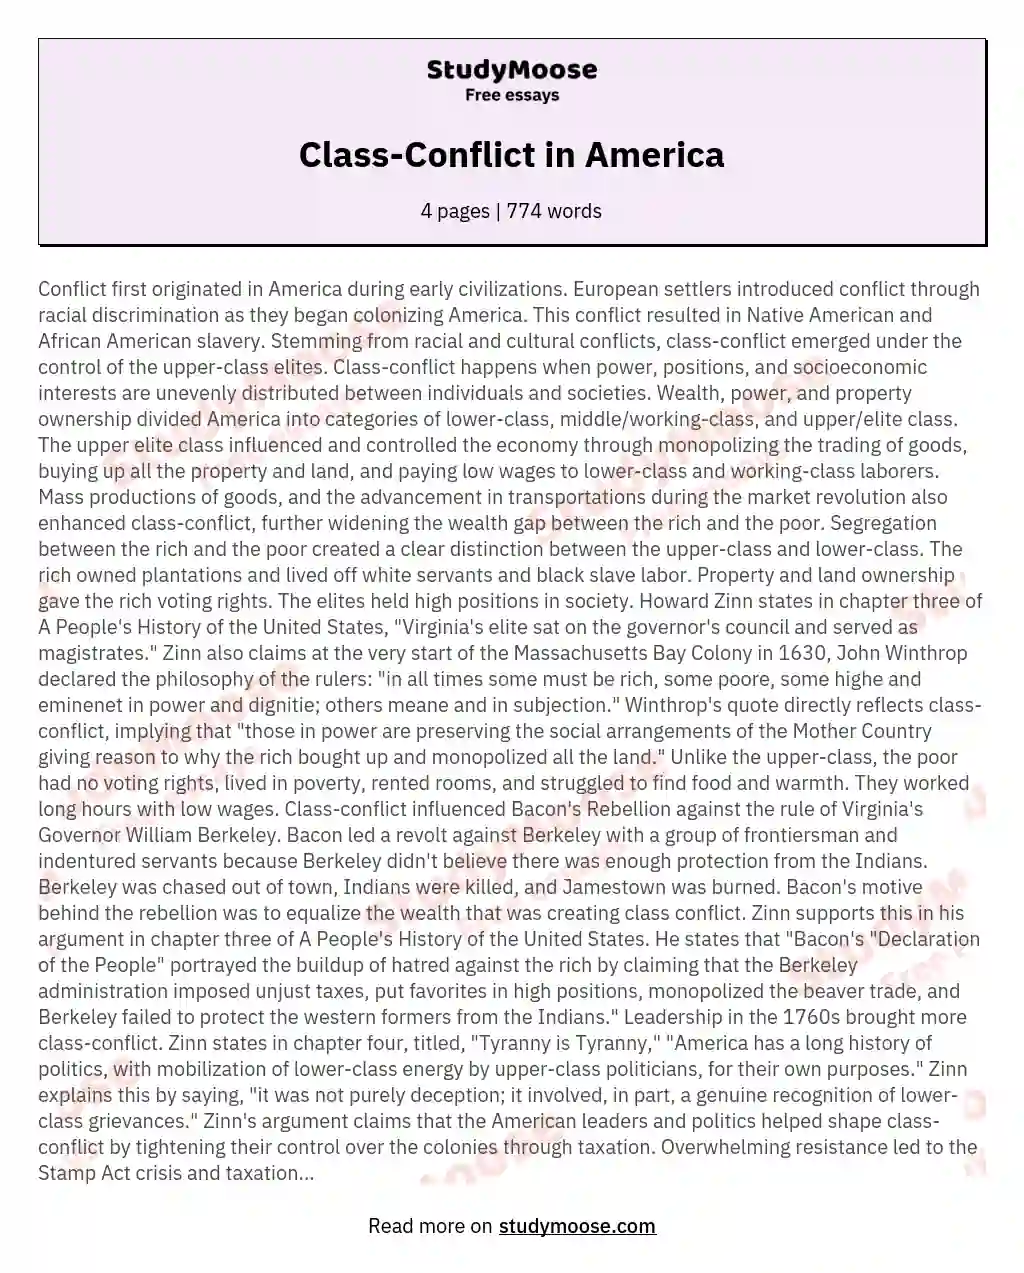 Class-Conflict in America essay